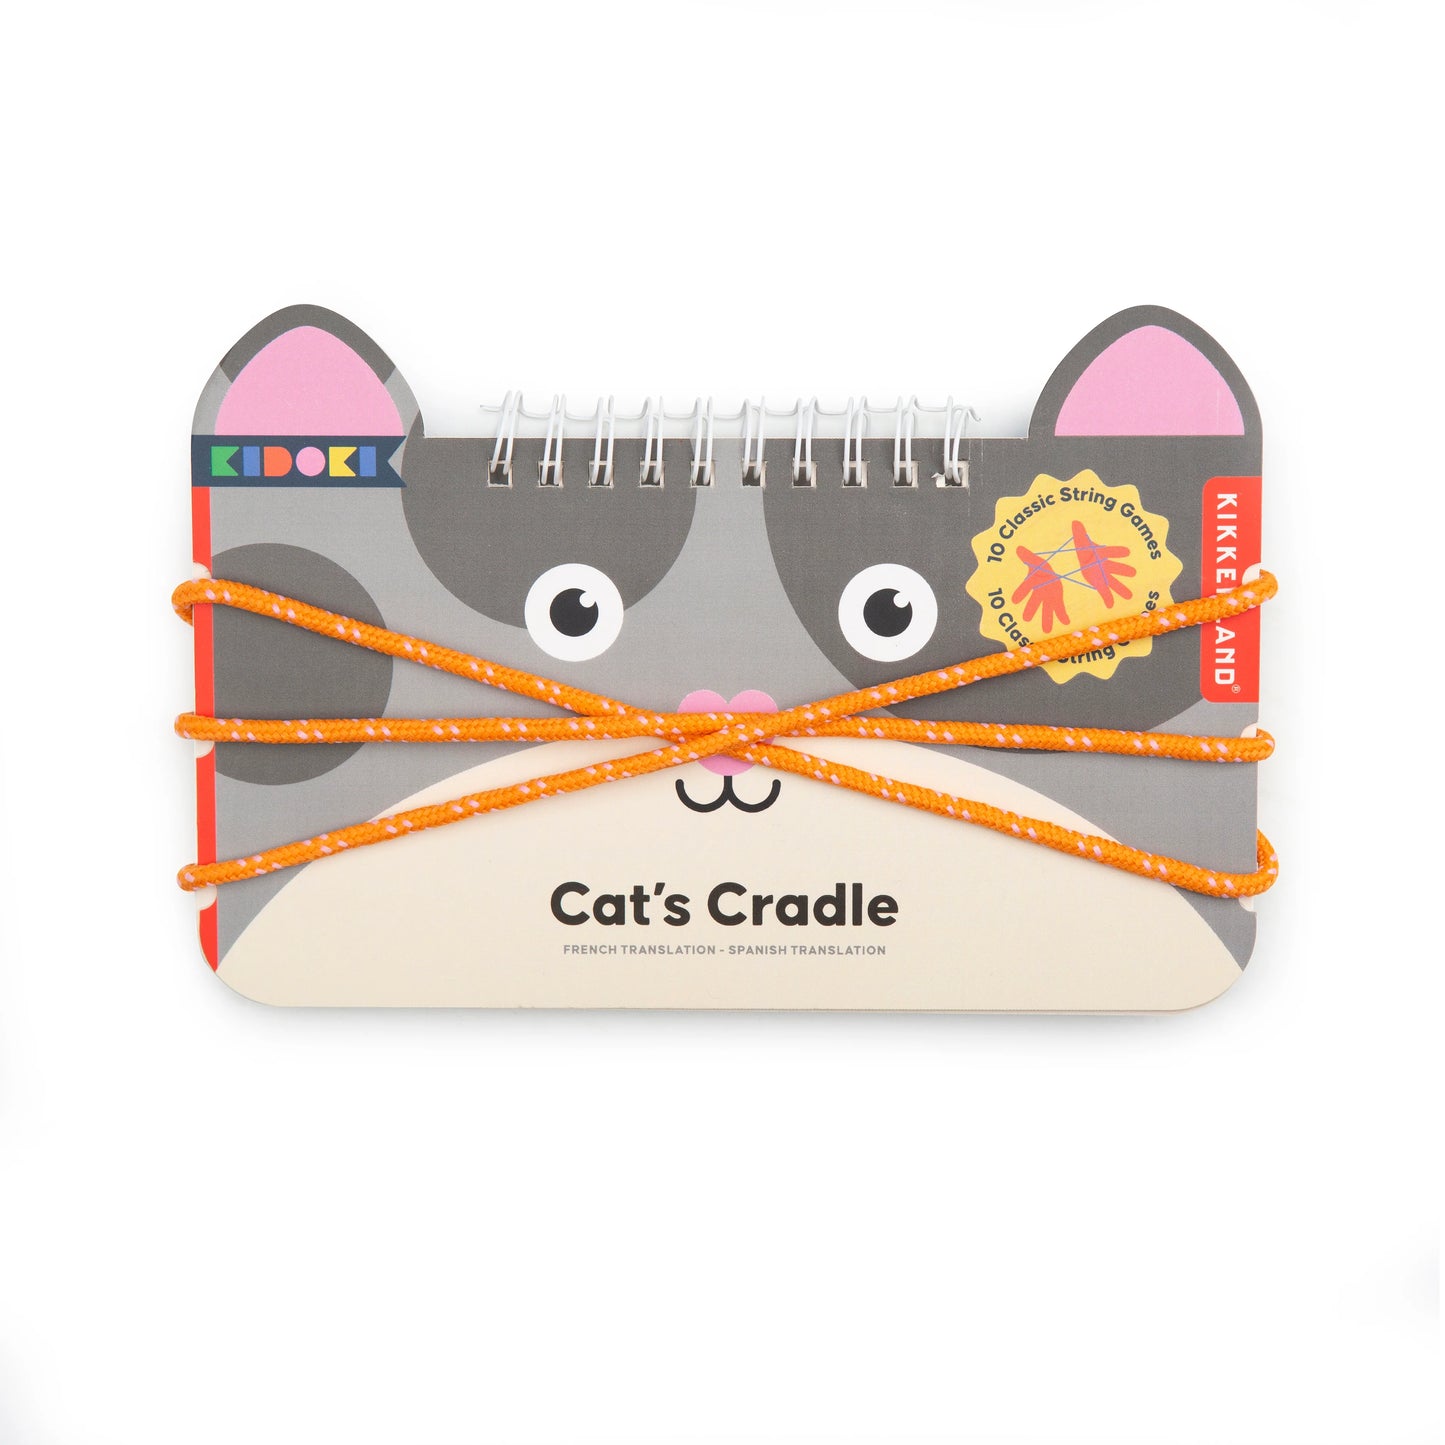 Kidoki Cat's Cradle